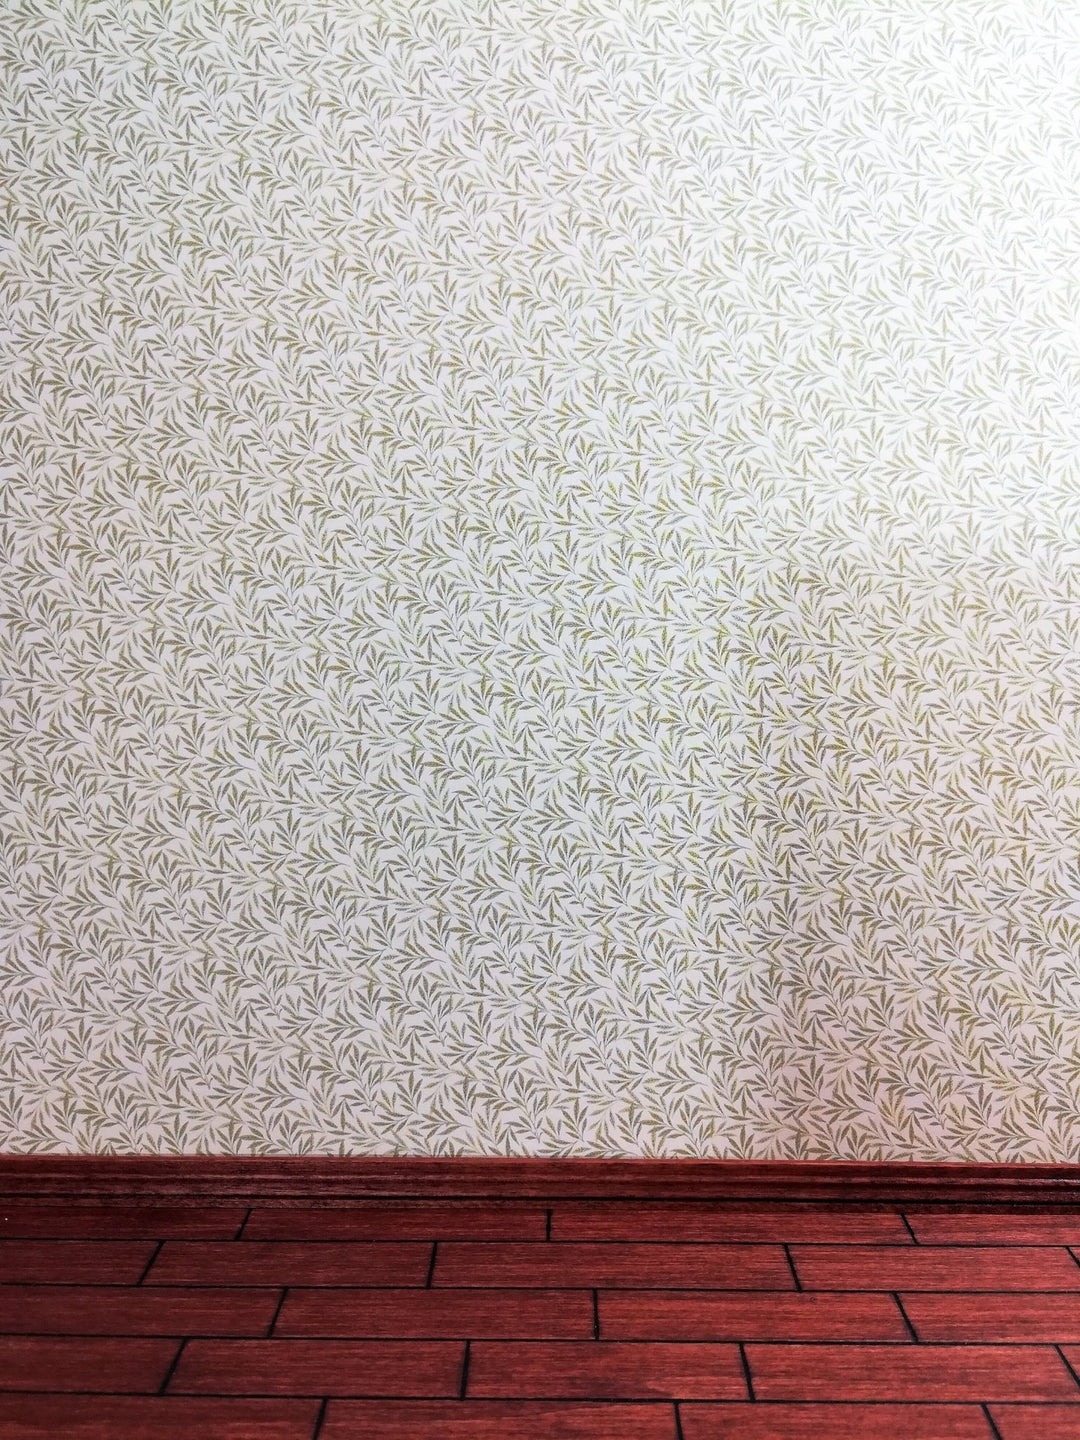 Dollhouse Miniature Wallpaper Brodnax Green & Cream Leaves "Willow" 1:12 Scale - Miniature Crush